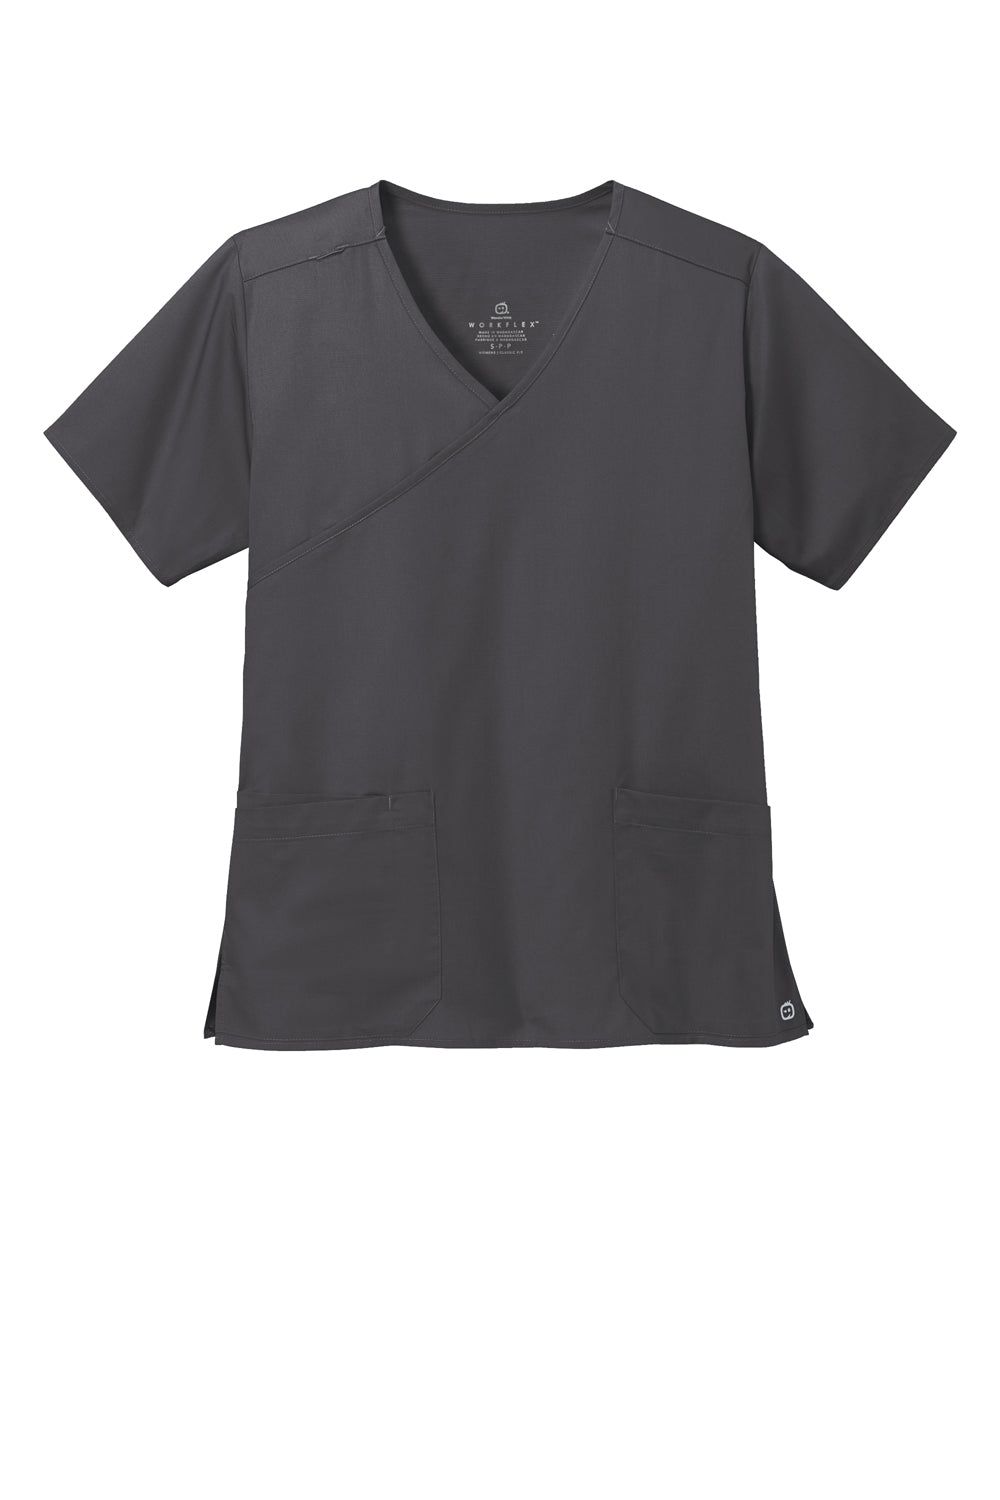 Wonderwink WW4760 WorkFlex Short Sleeve V-Neck Mock Wrap Shirt Pewter Grey Flat Front